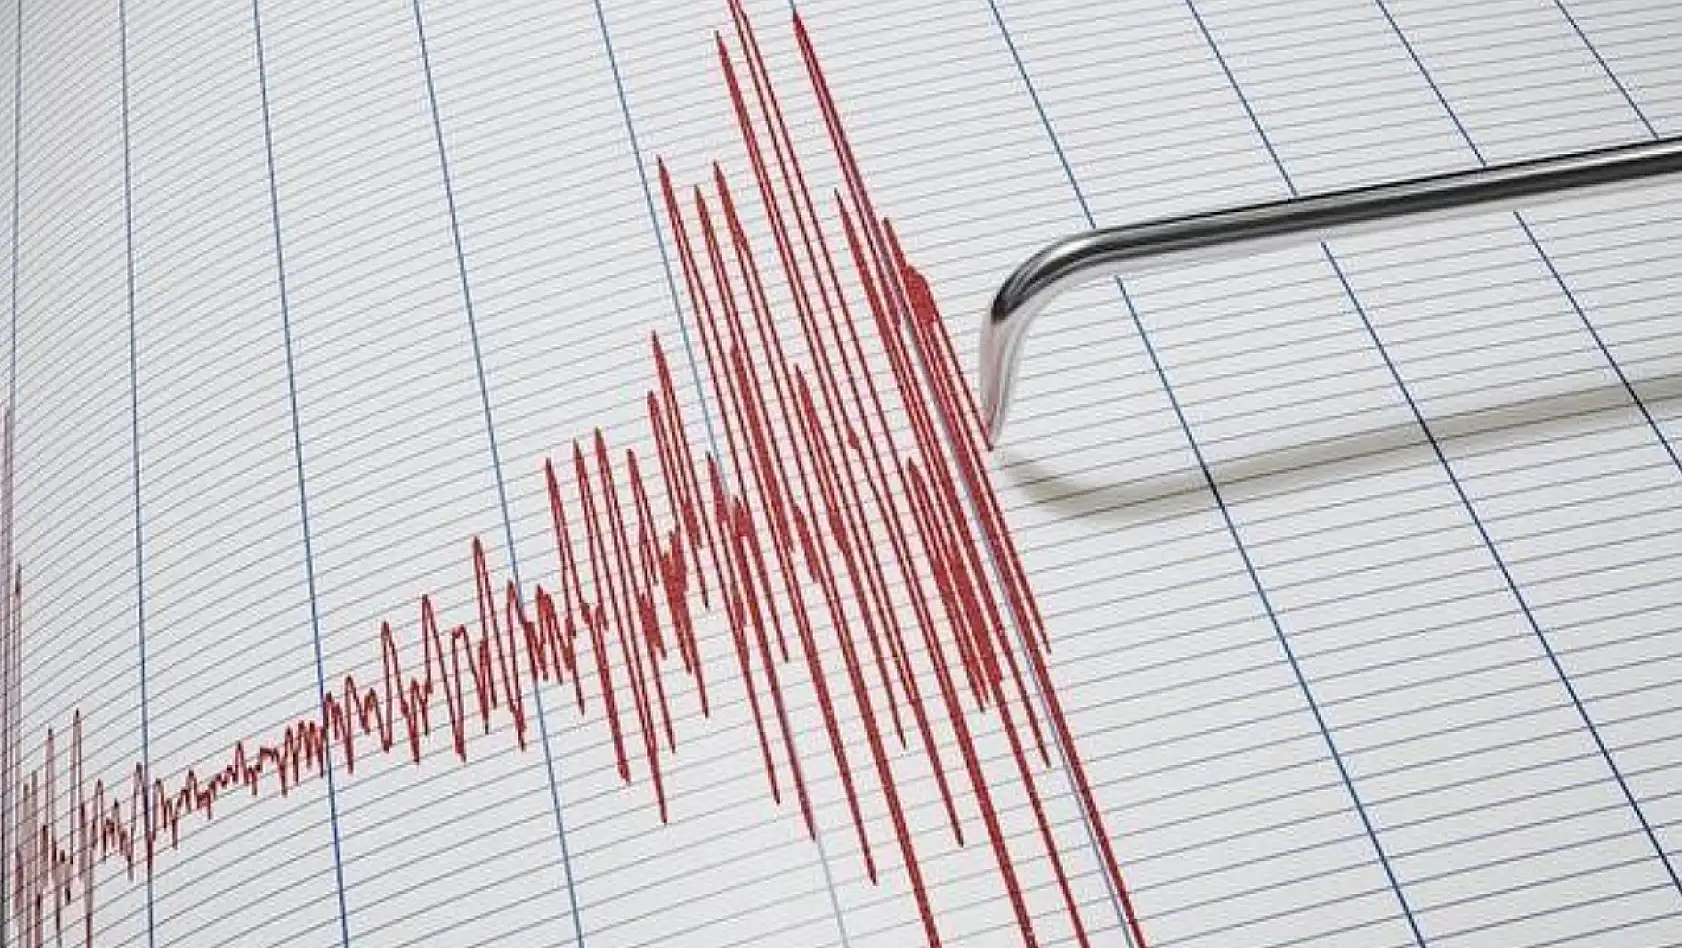 Çanakkale'de Korkutan Deprem!